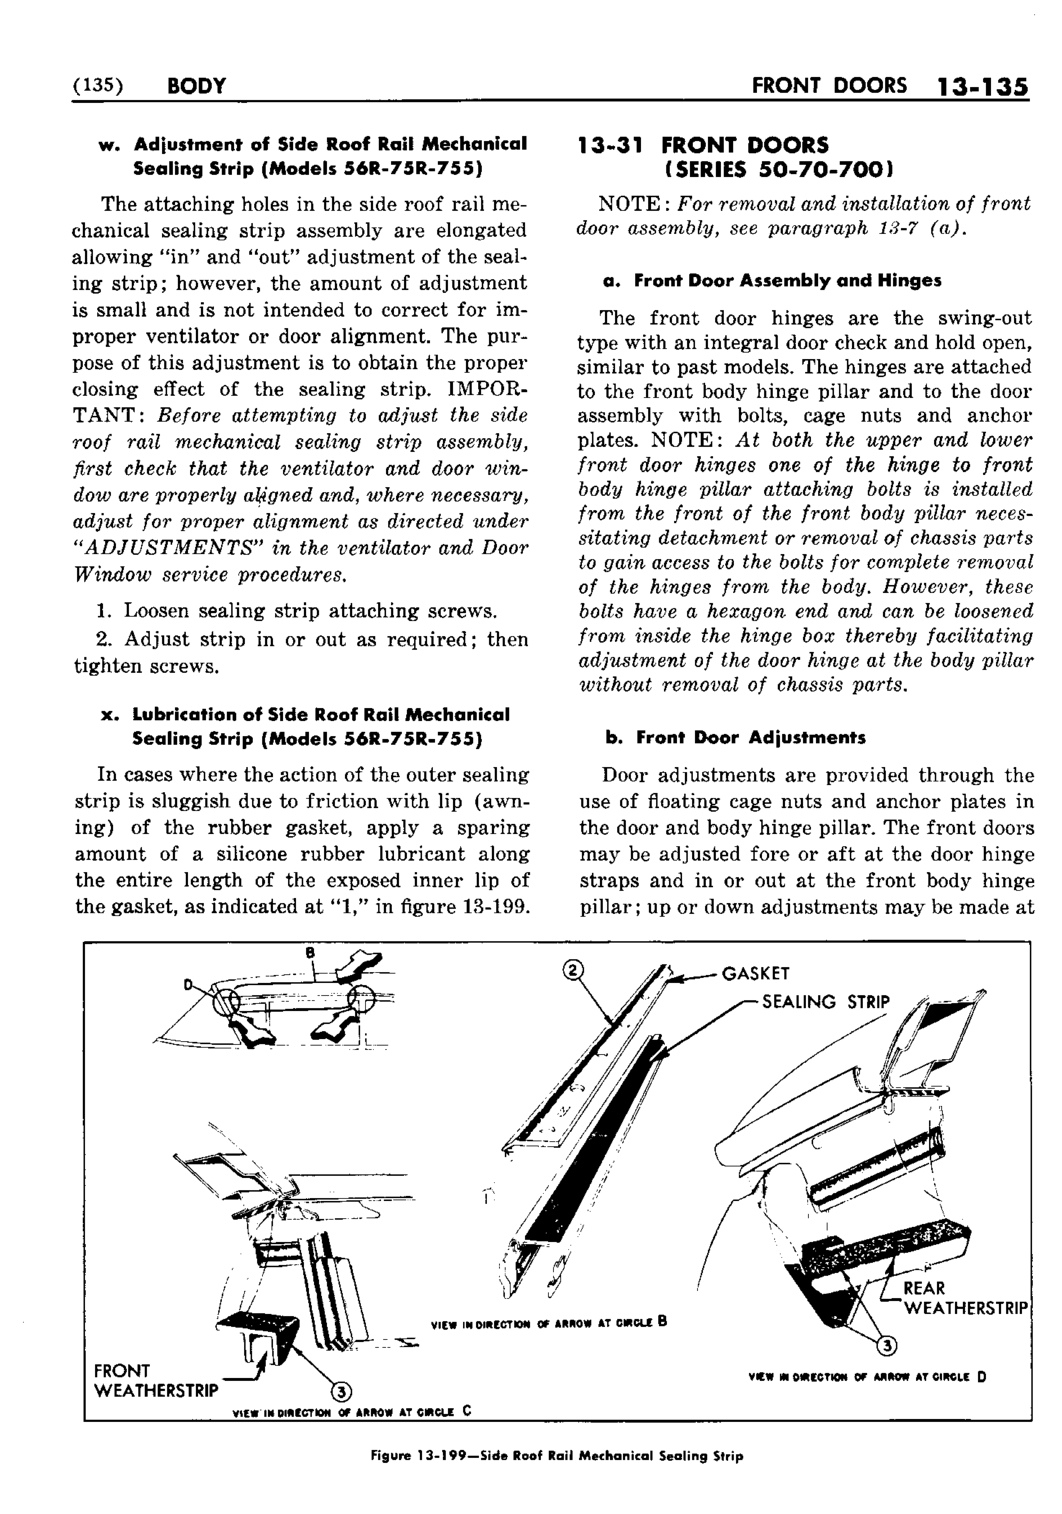 n_1958 Buick Body Service Manual-136-136.jpg